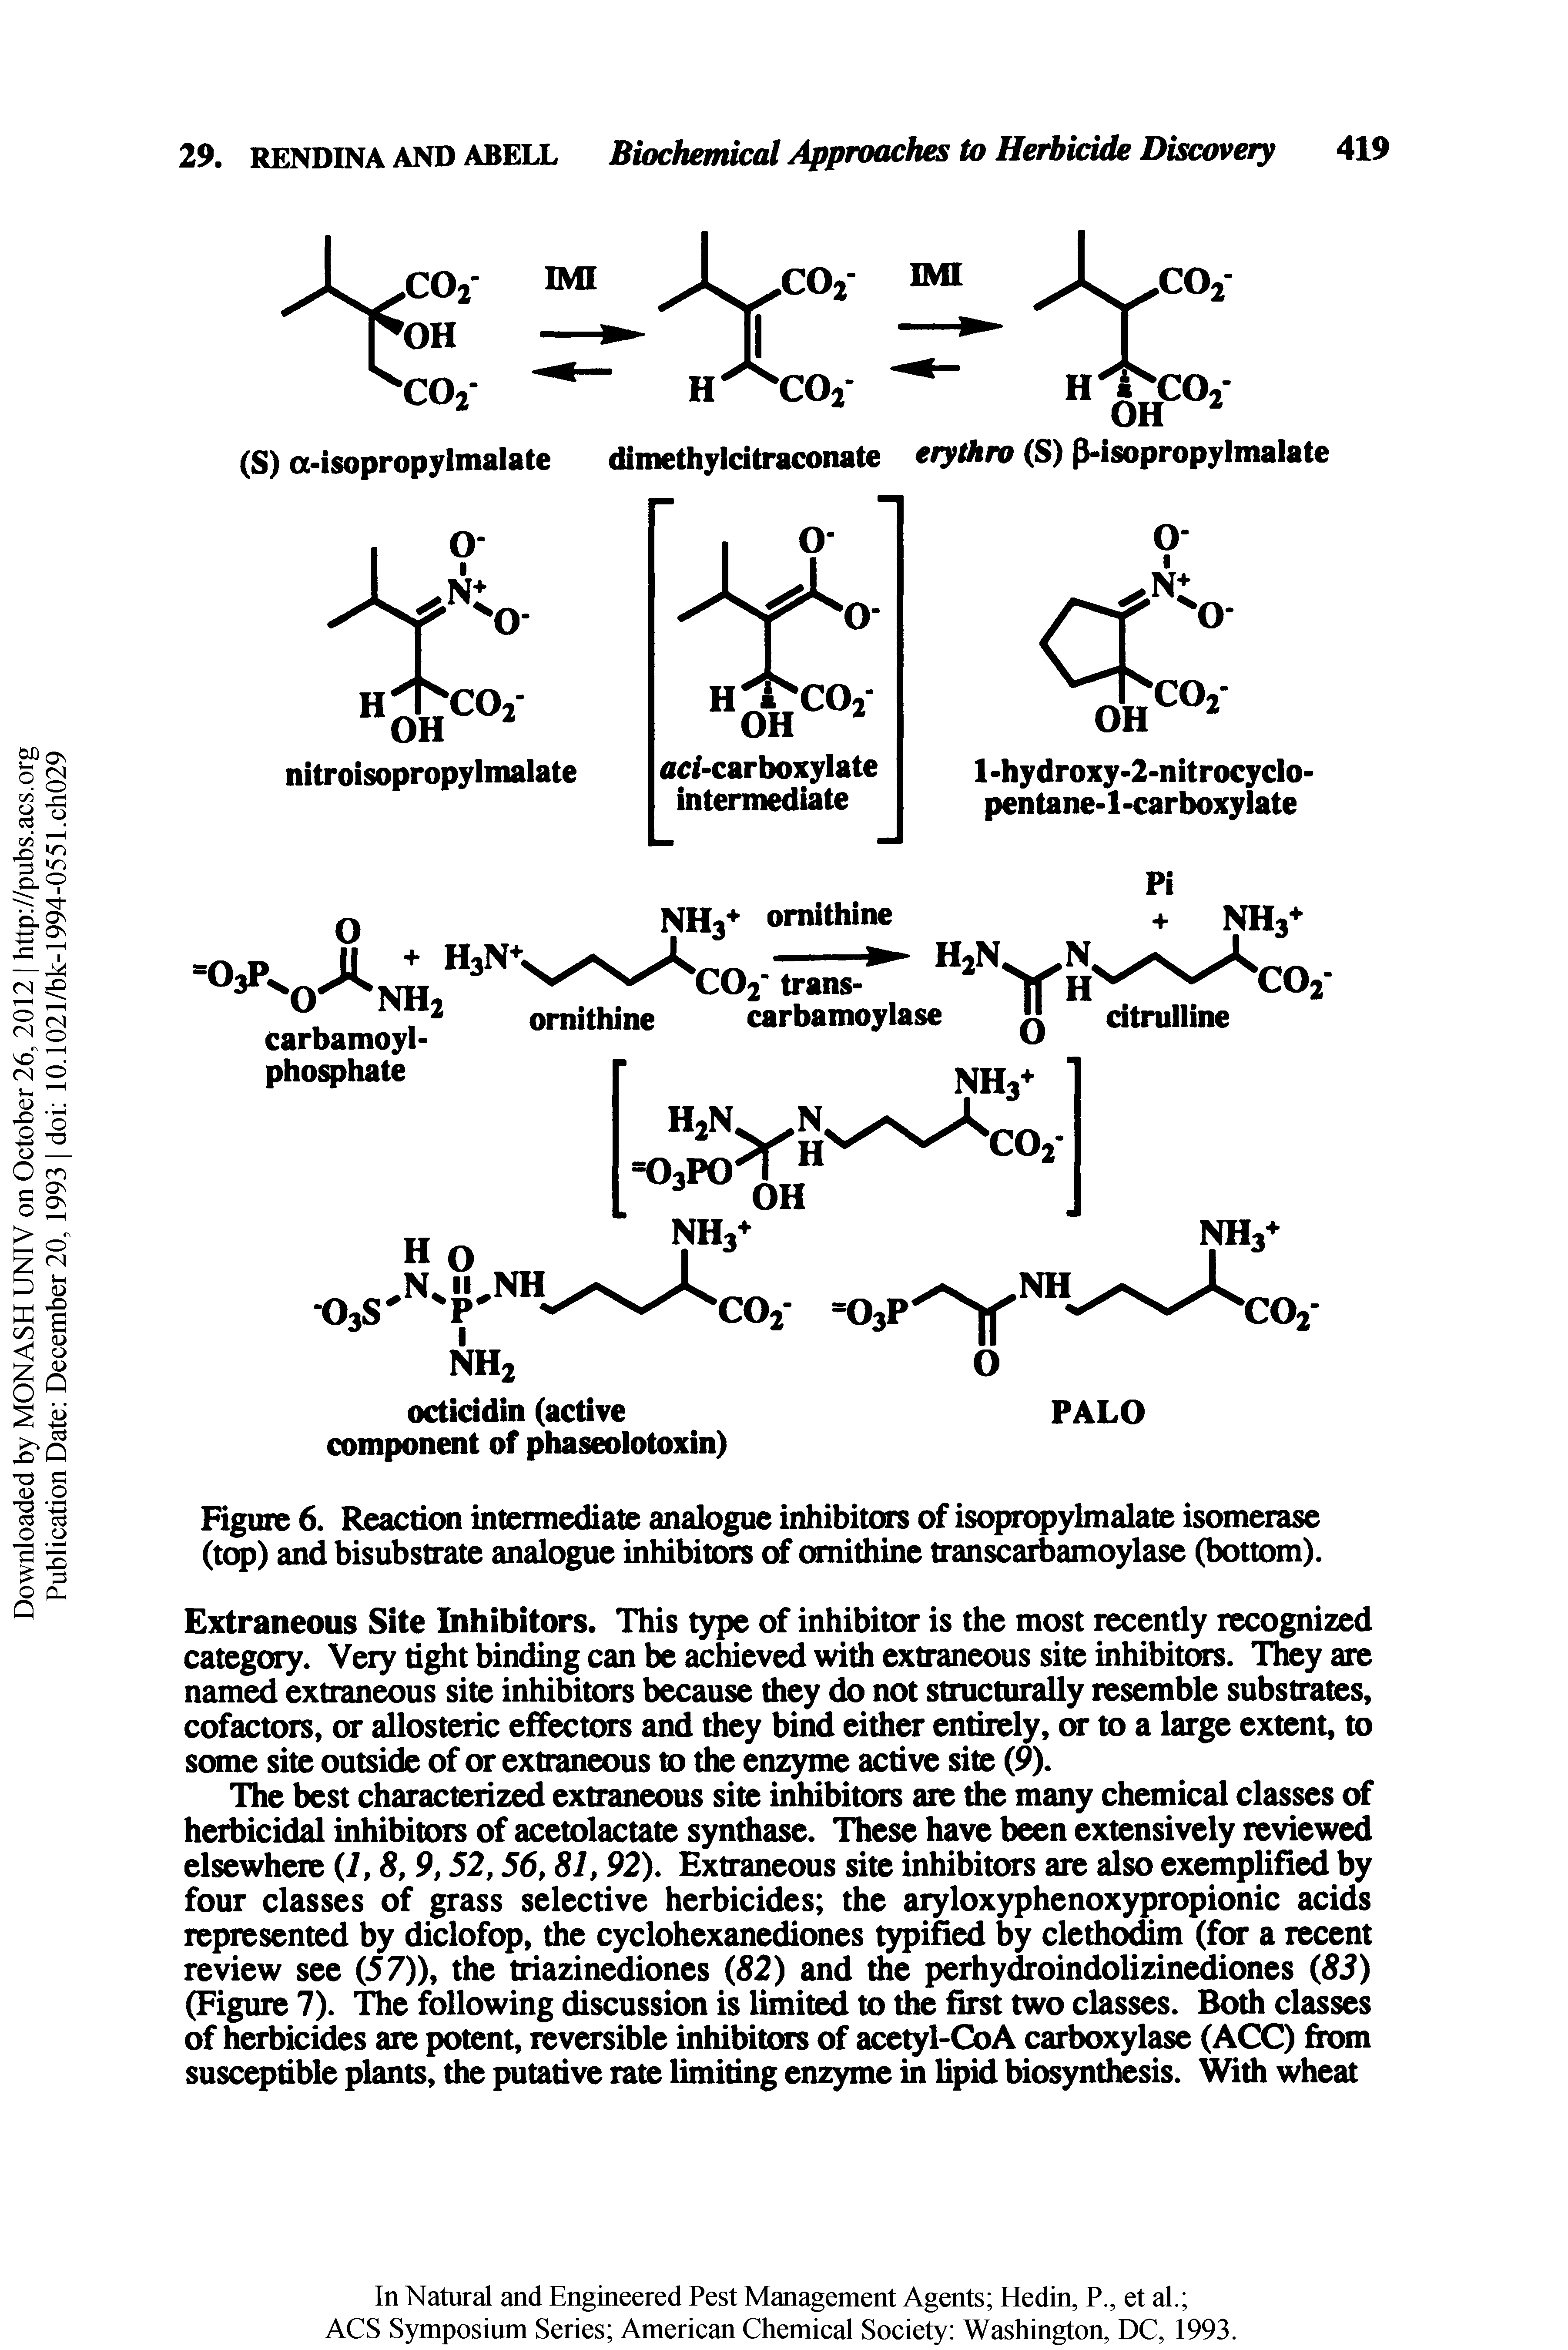 Figure 6. Reaction intermediate analogue inhibitors of isopropylmalate isomeiase (top) and bisubstrate analogue inhibitors of ornithine transcarbamoylase (bottom).